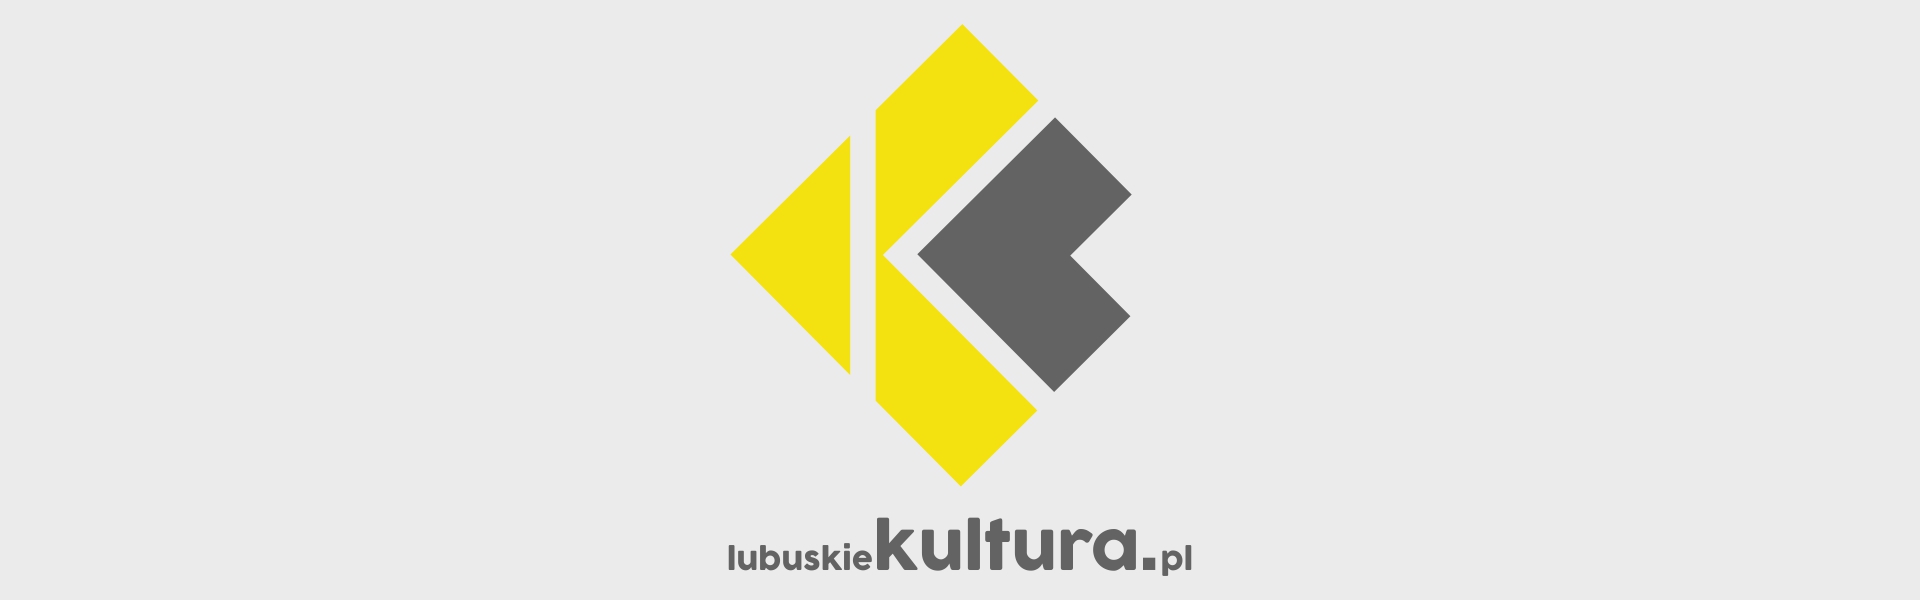 logo lubuskiekultura.pl